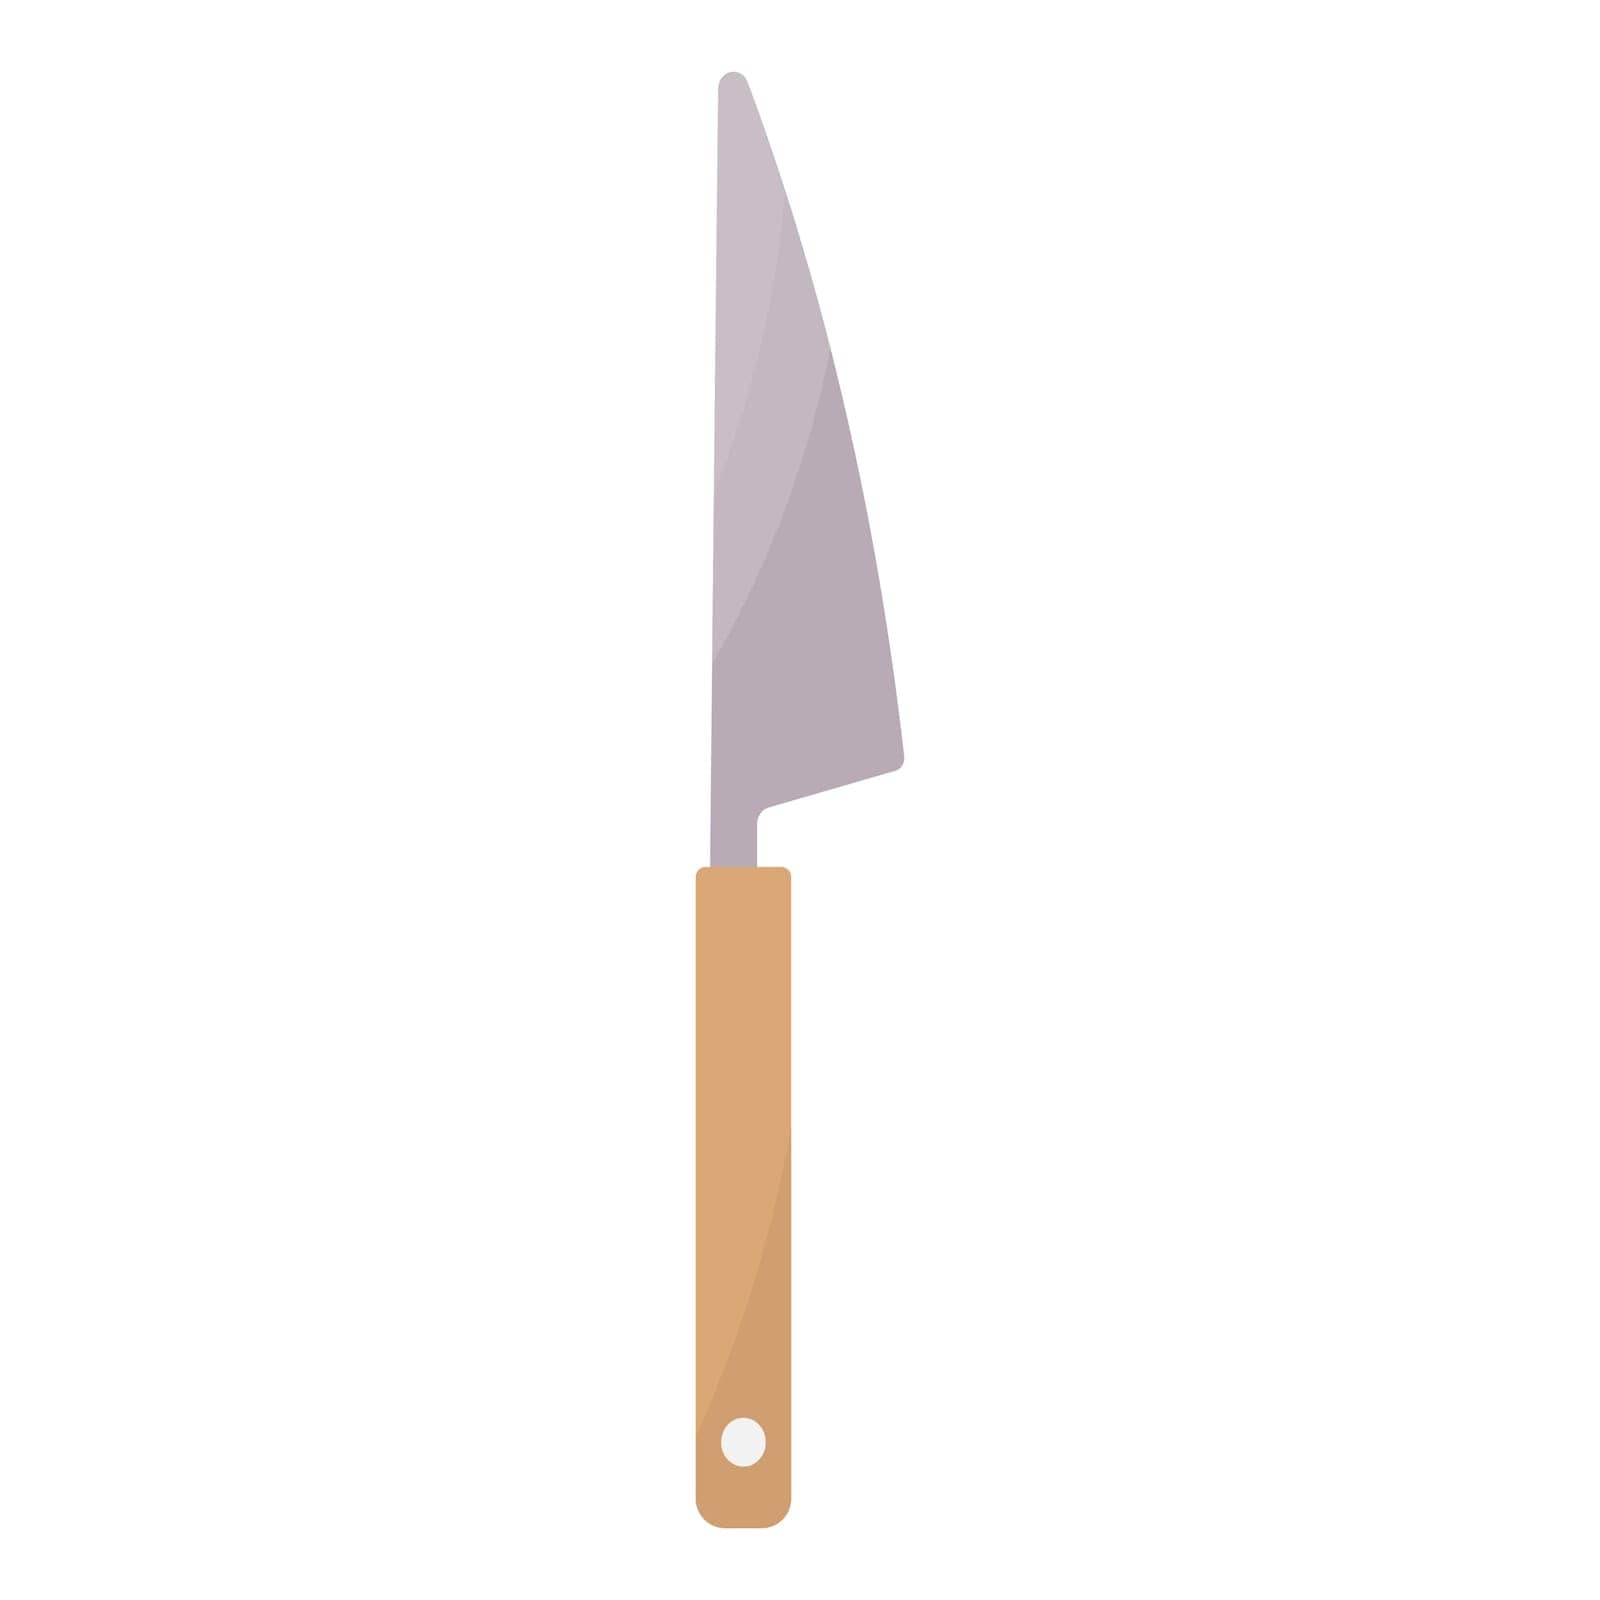 knife kitchen sharp cut cook icon element by kristushka_15_108